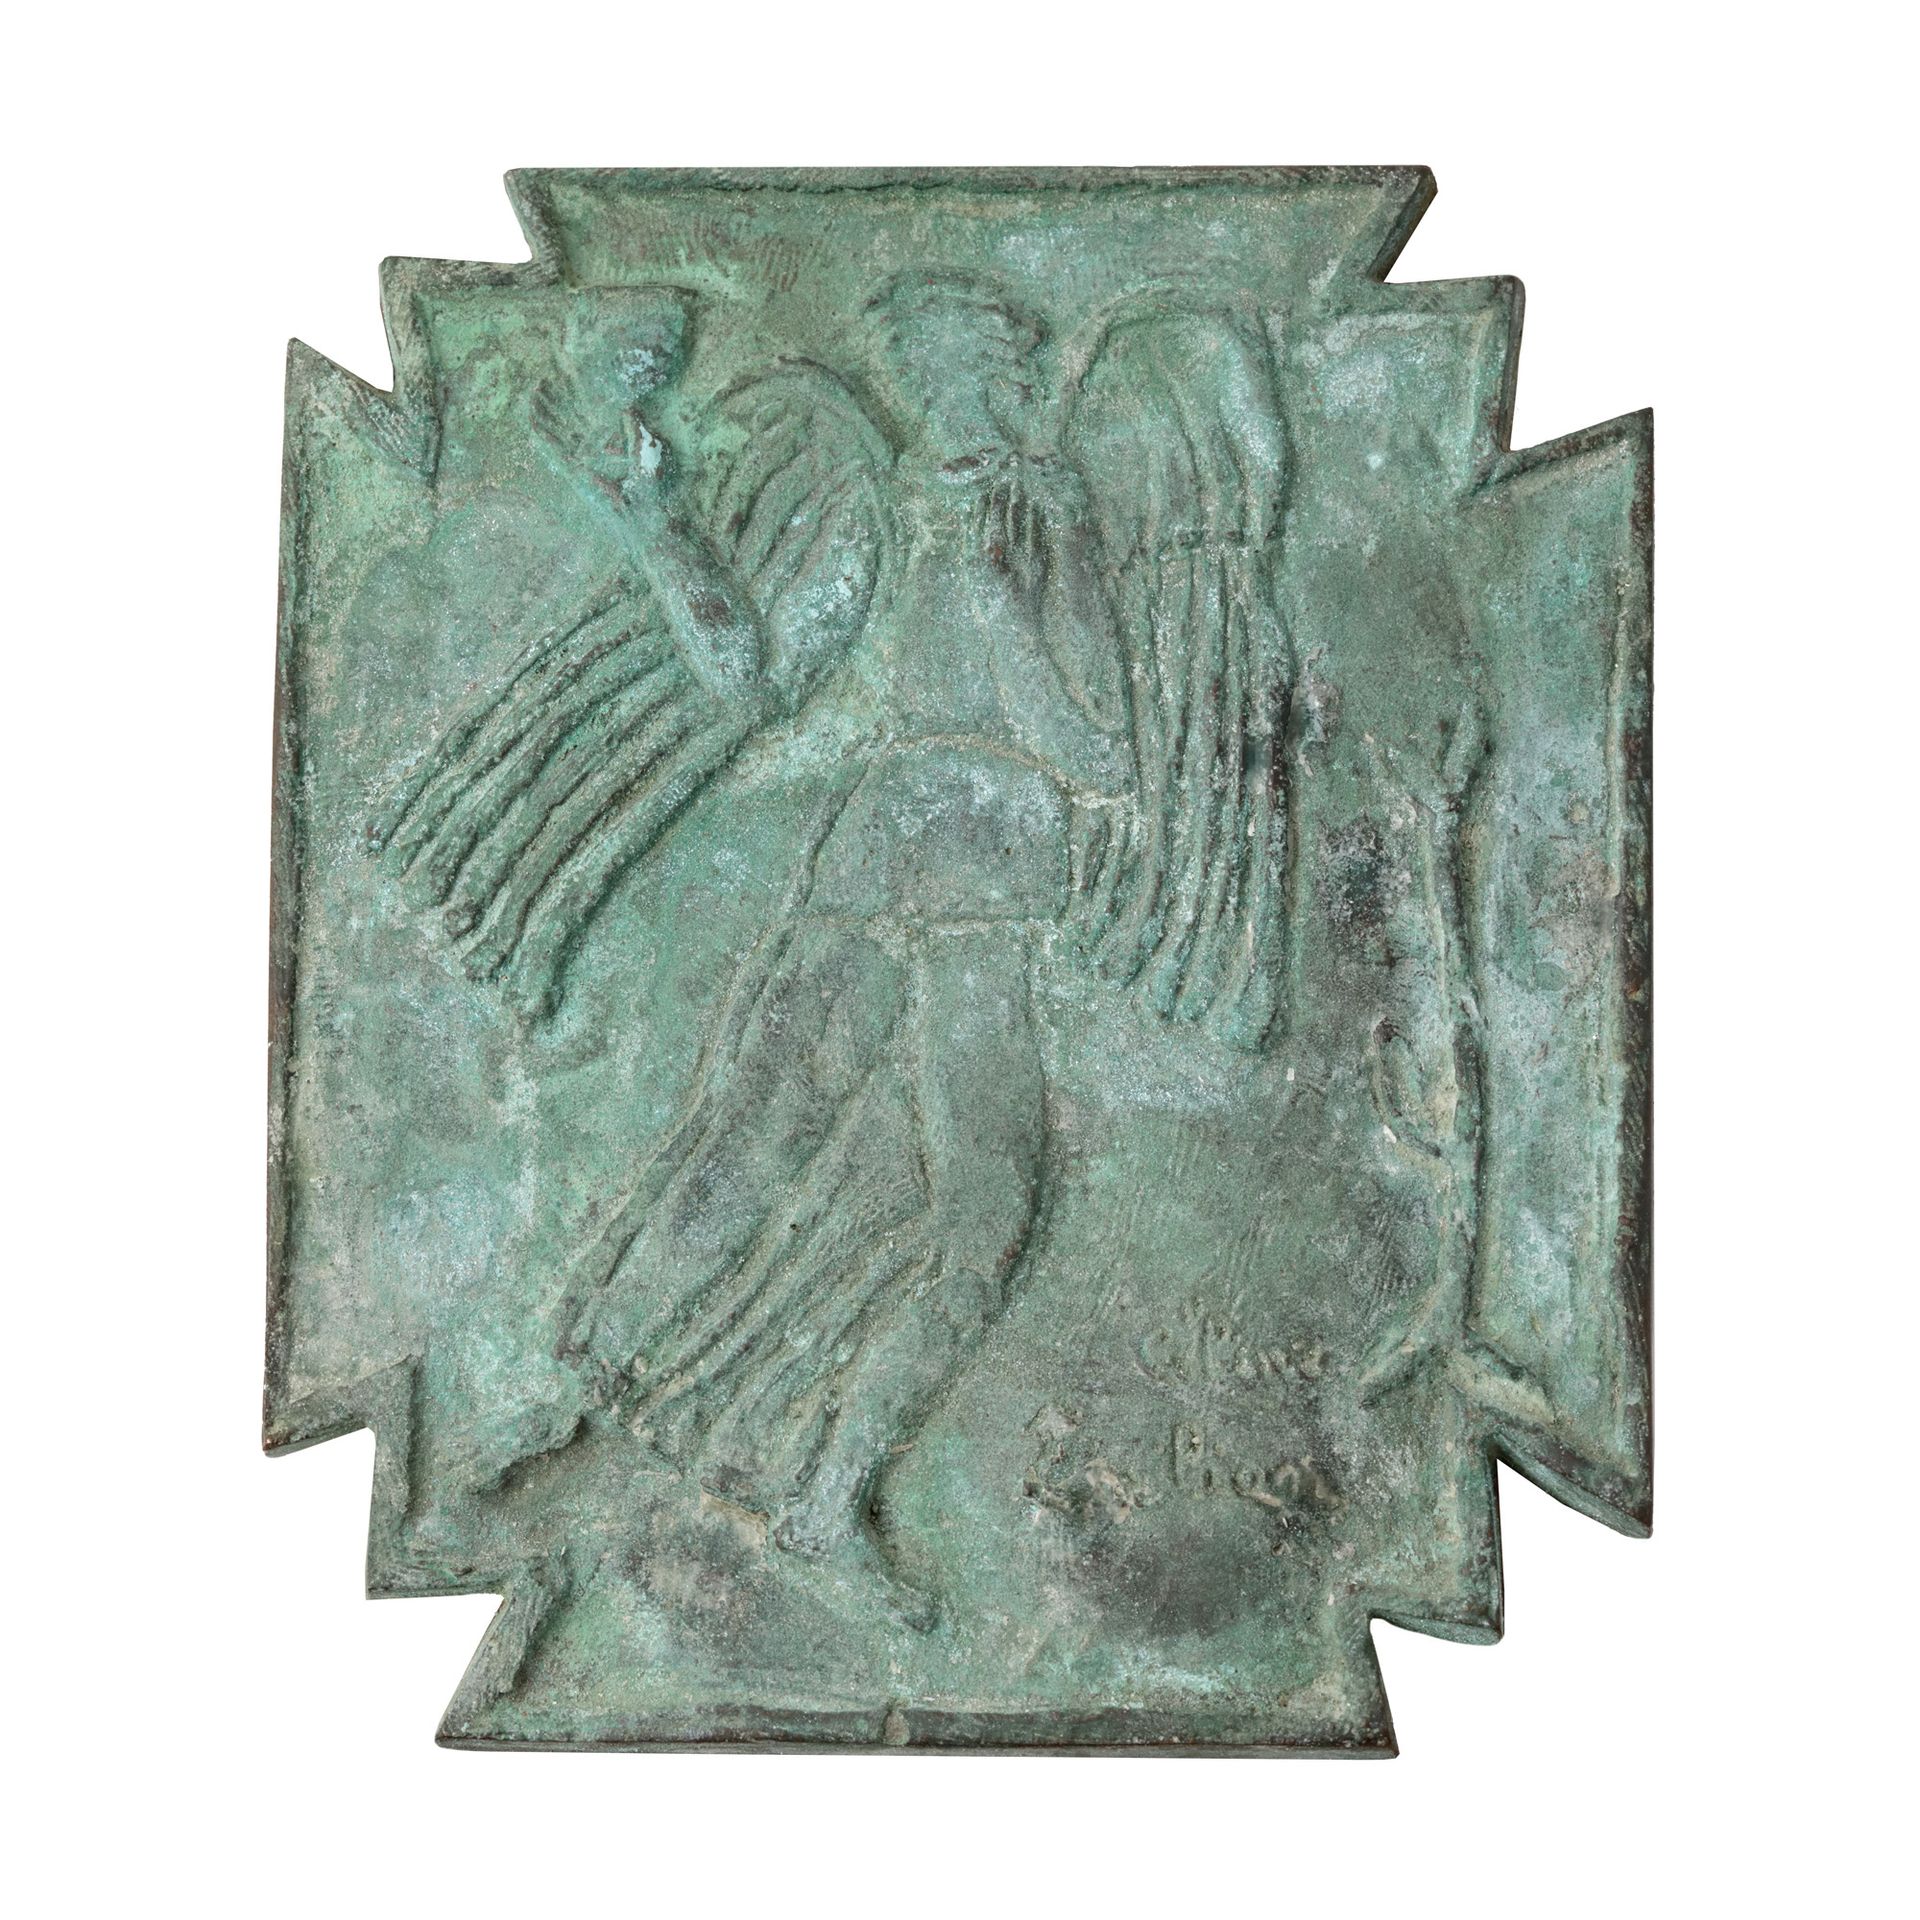 Celine Emilian (Sevastos), Archangel Gabriel 青铜，大理石，30 x 15 x 7，右下方有签名 "Celine E&hellip;